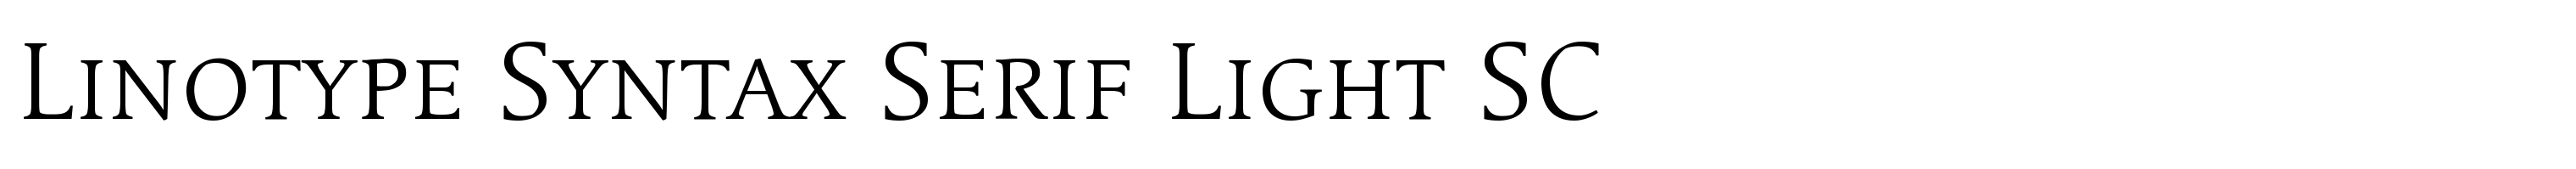 Linotype Syntax Serif Light SC